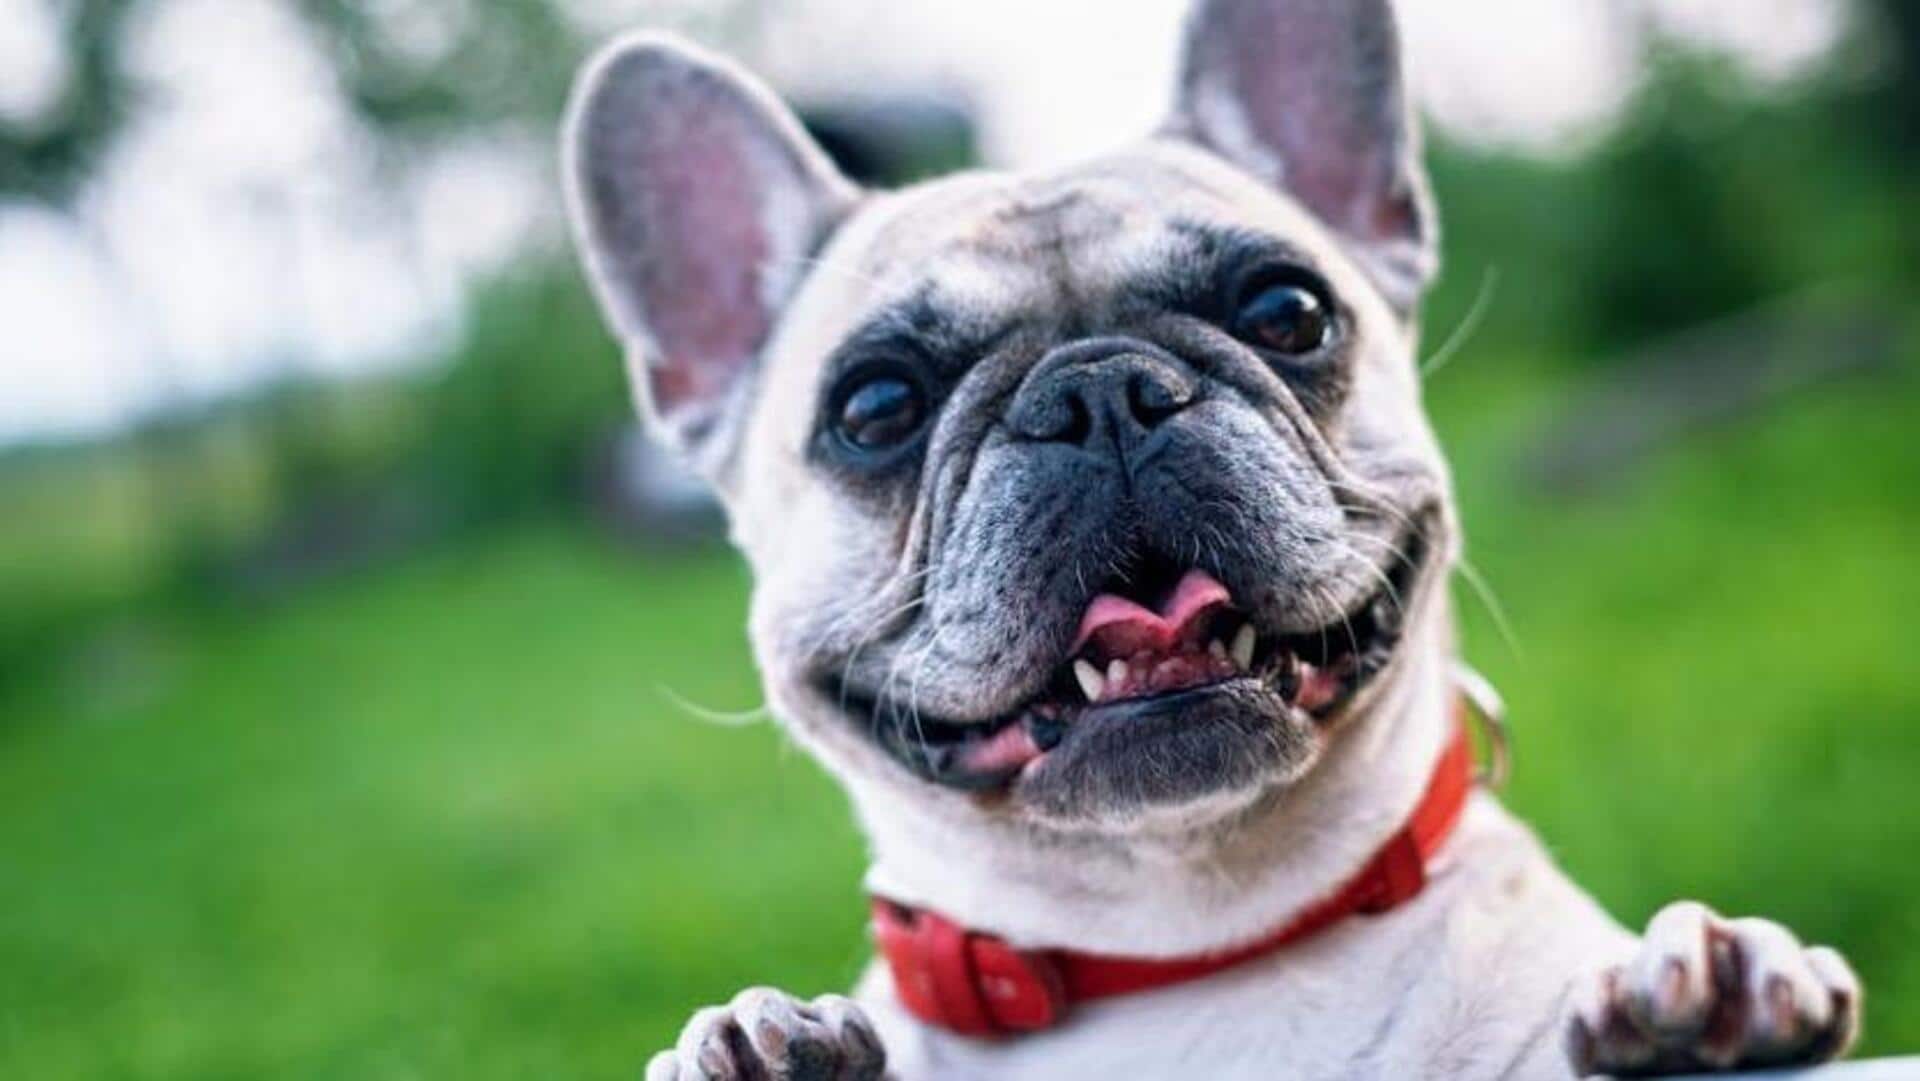 Bulldog breathing basics: Respiratory health tips for your dog